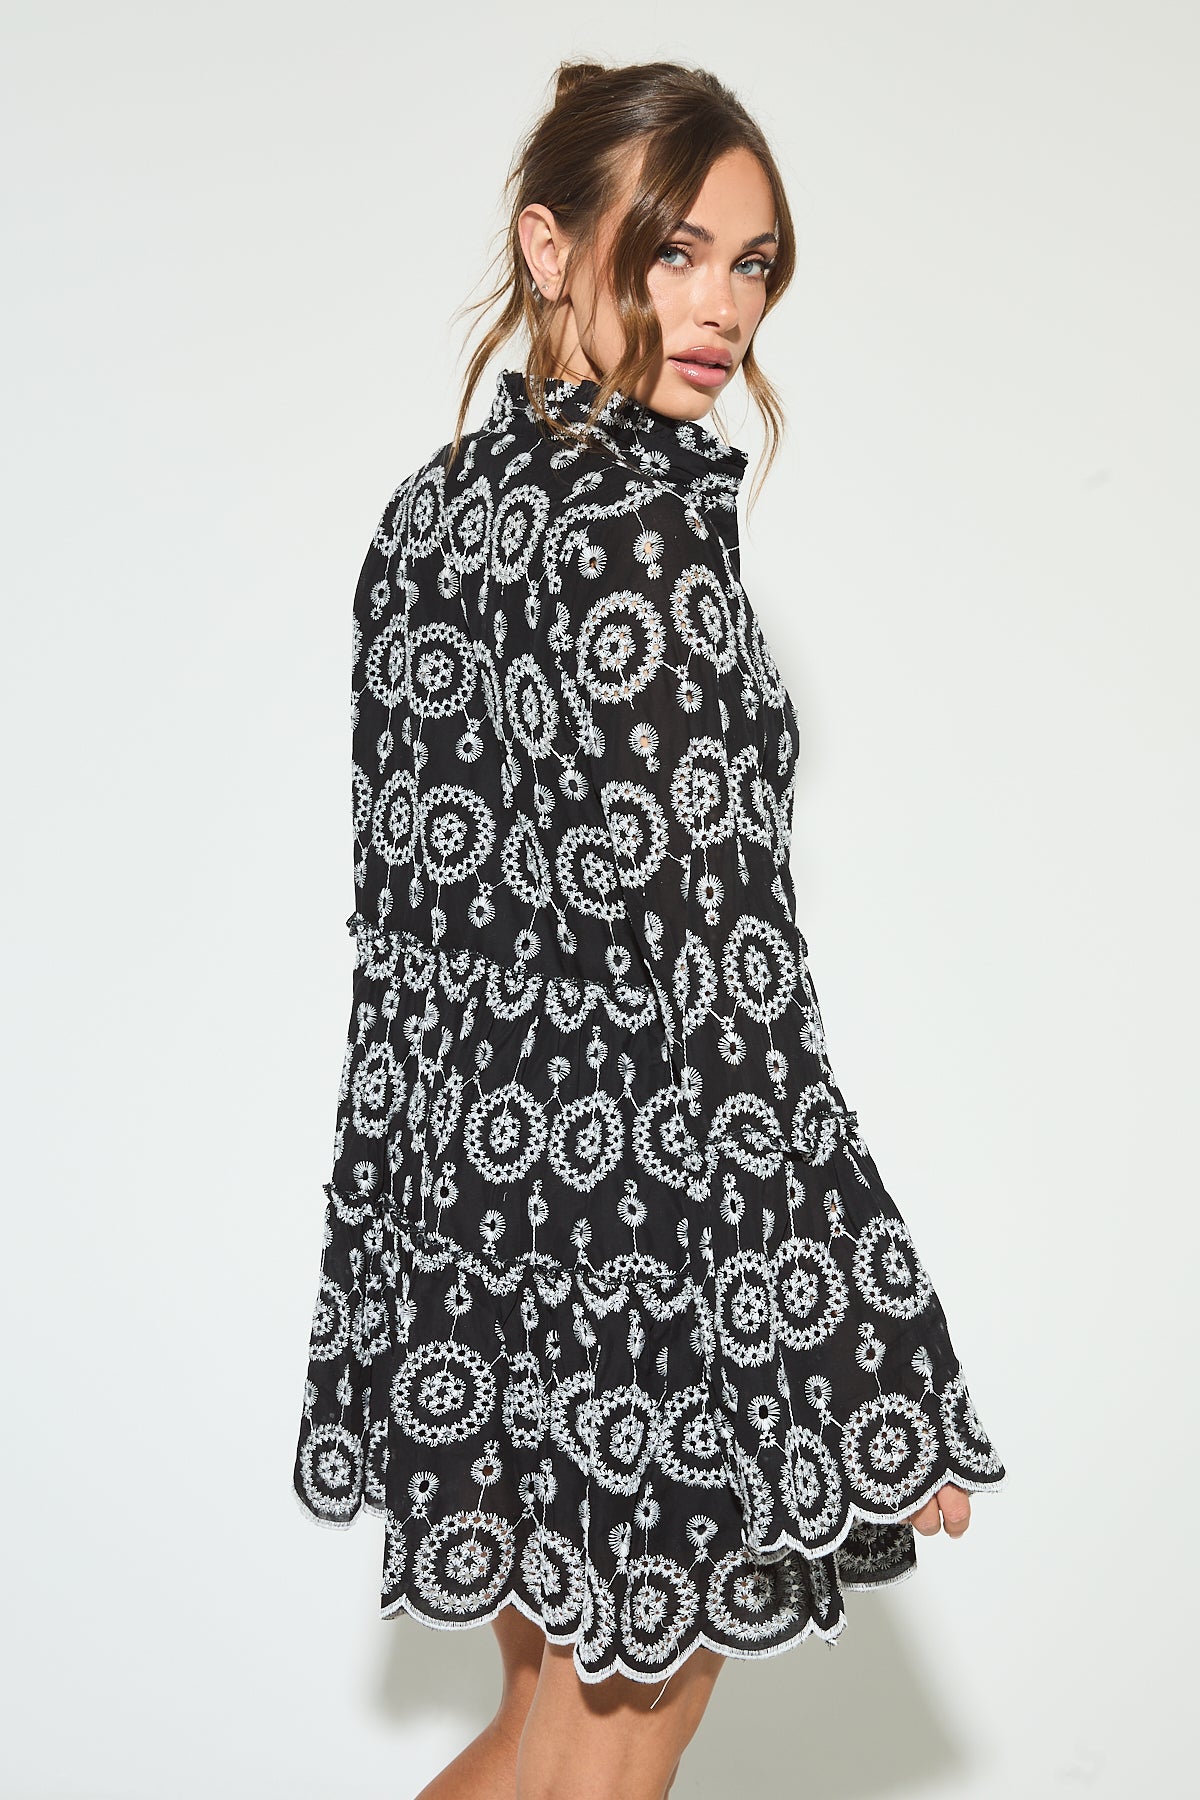 SOFIA Black Embroidered Dress